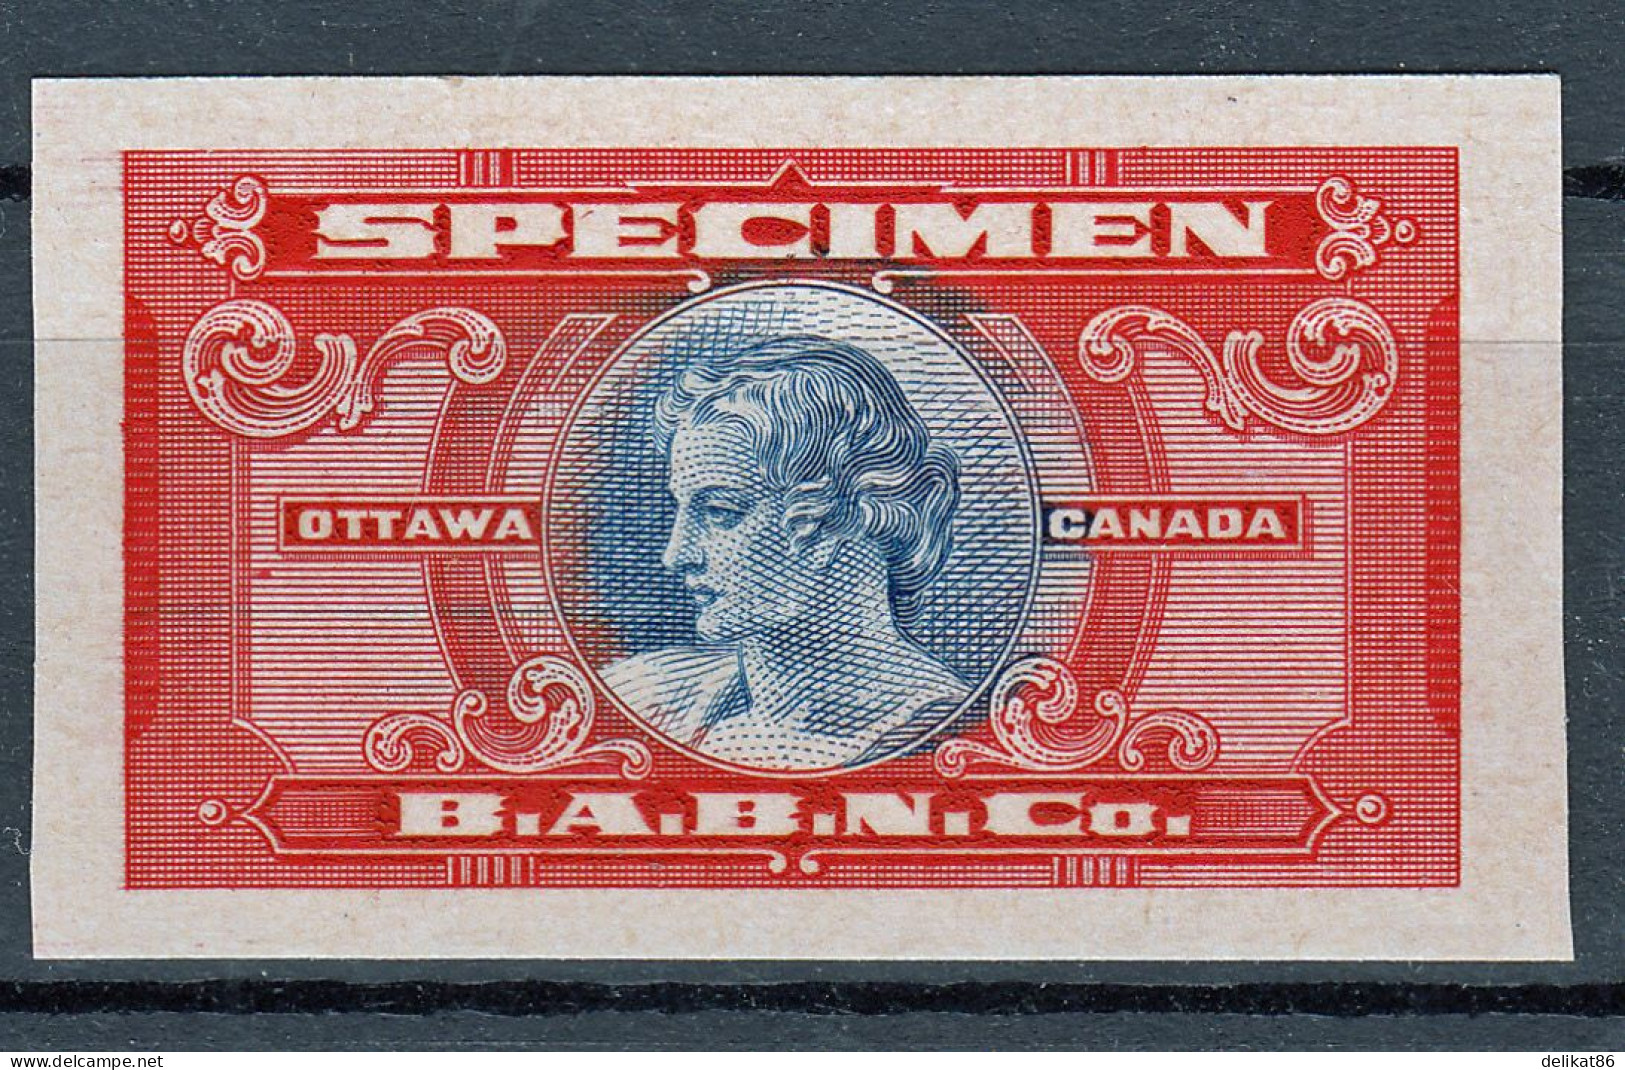 Probedruck, Test-Stamp, Specimen B.A.B.N.Co-Ottawa Kanada 1935 - Proofs & Reprints